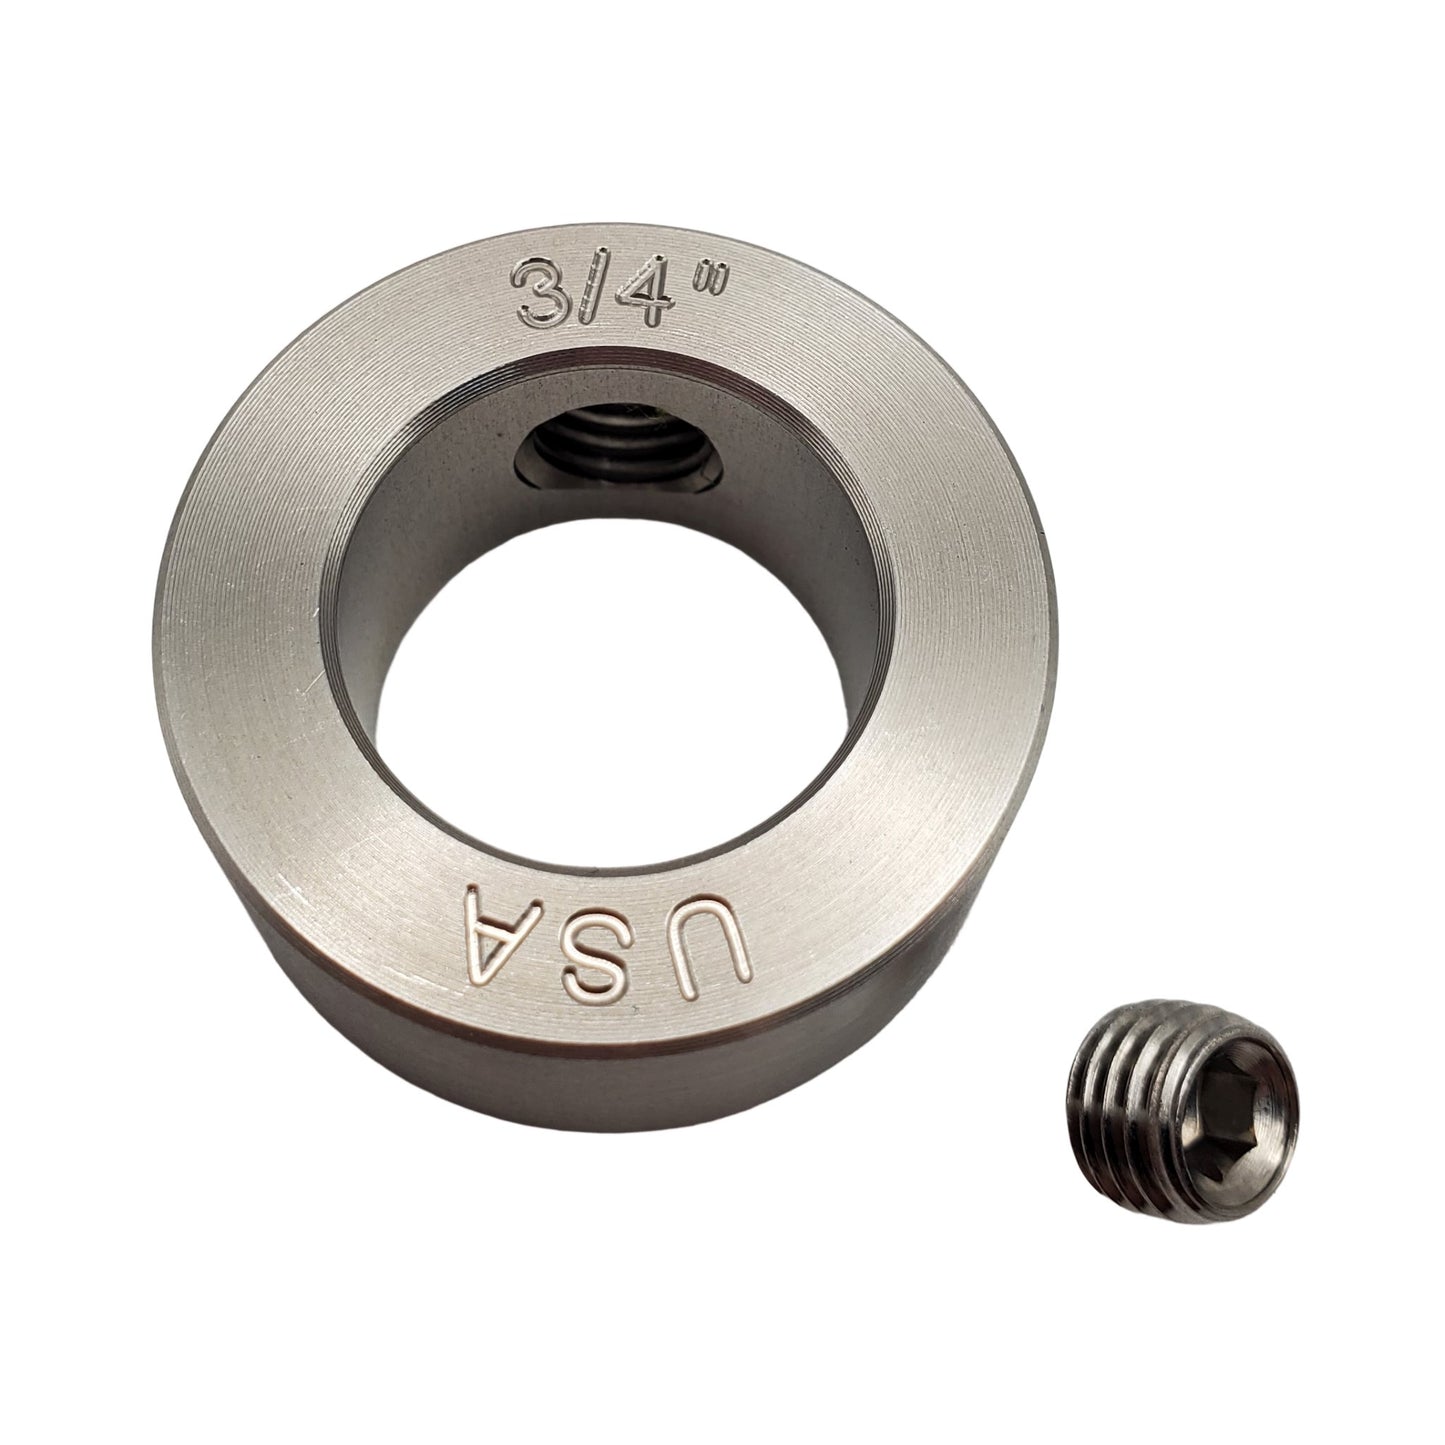 0.75" Diameter - Set Screw Shaft Collar - 303 Stainless Steel